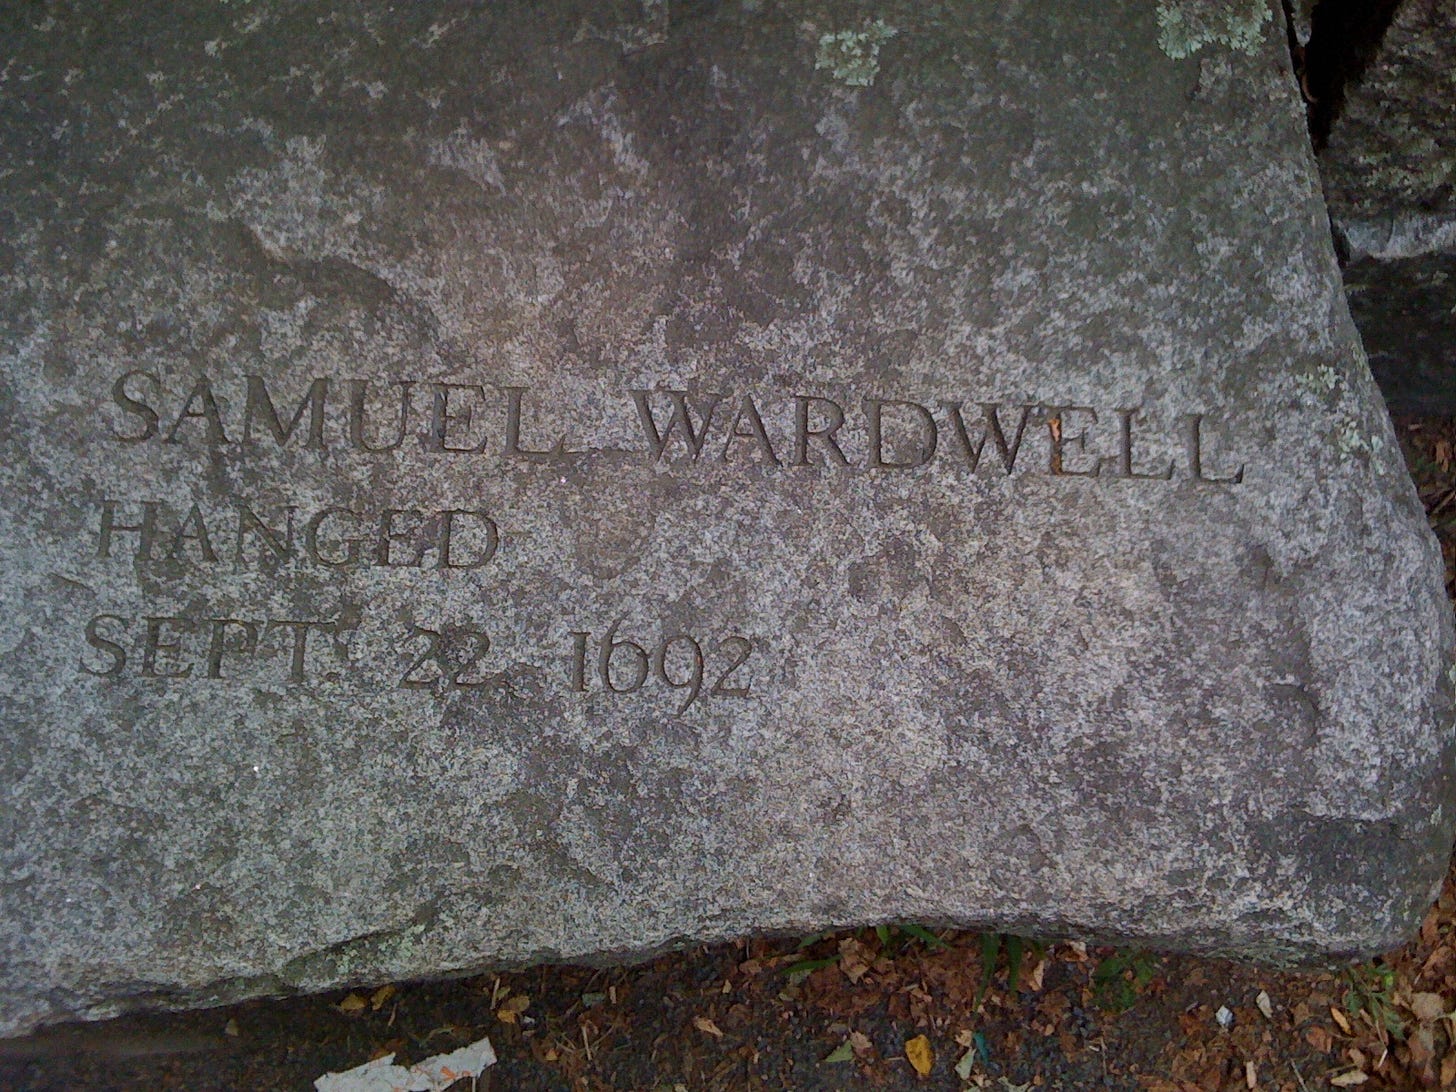 Samuel Wardwell - Wikipedia